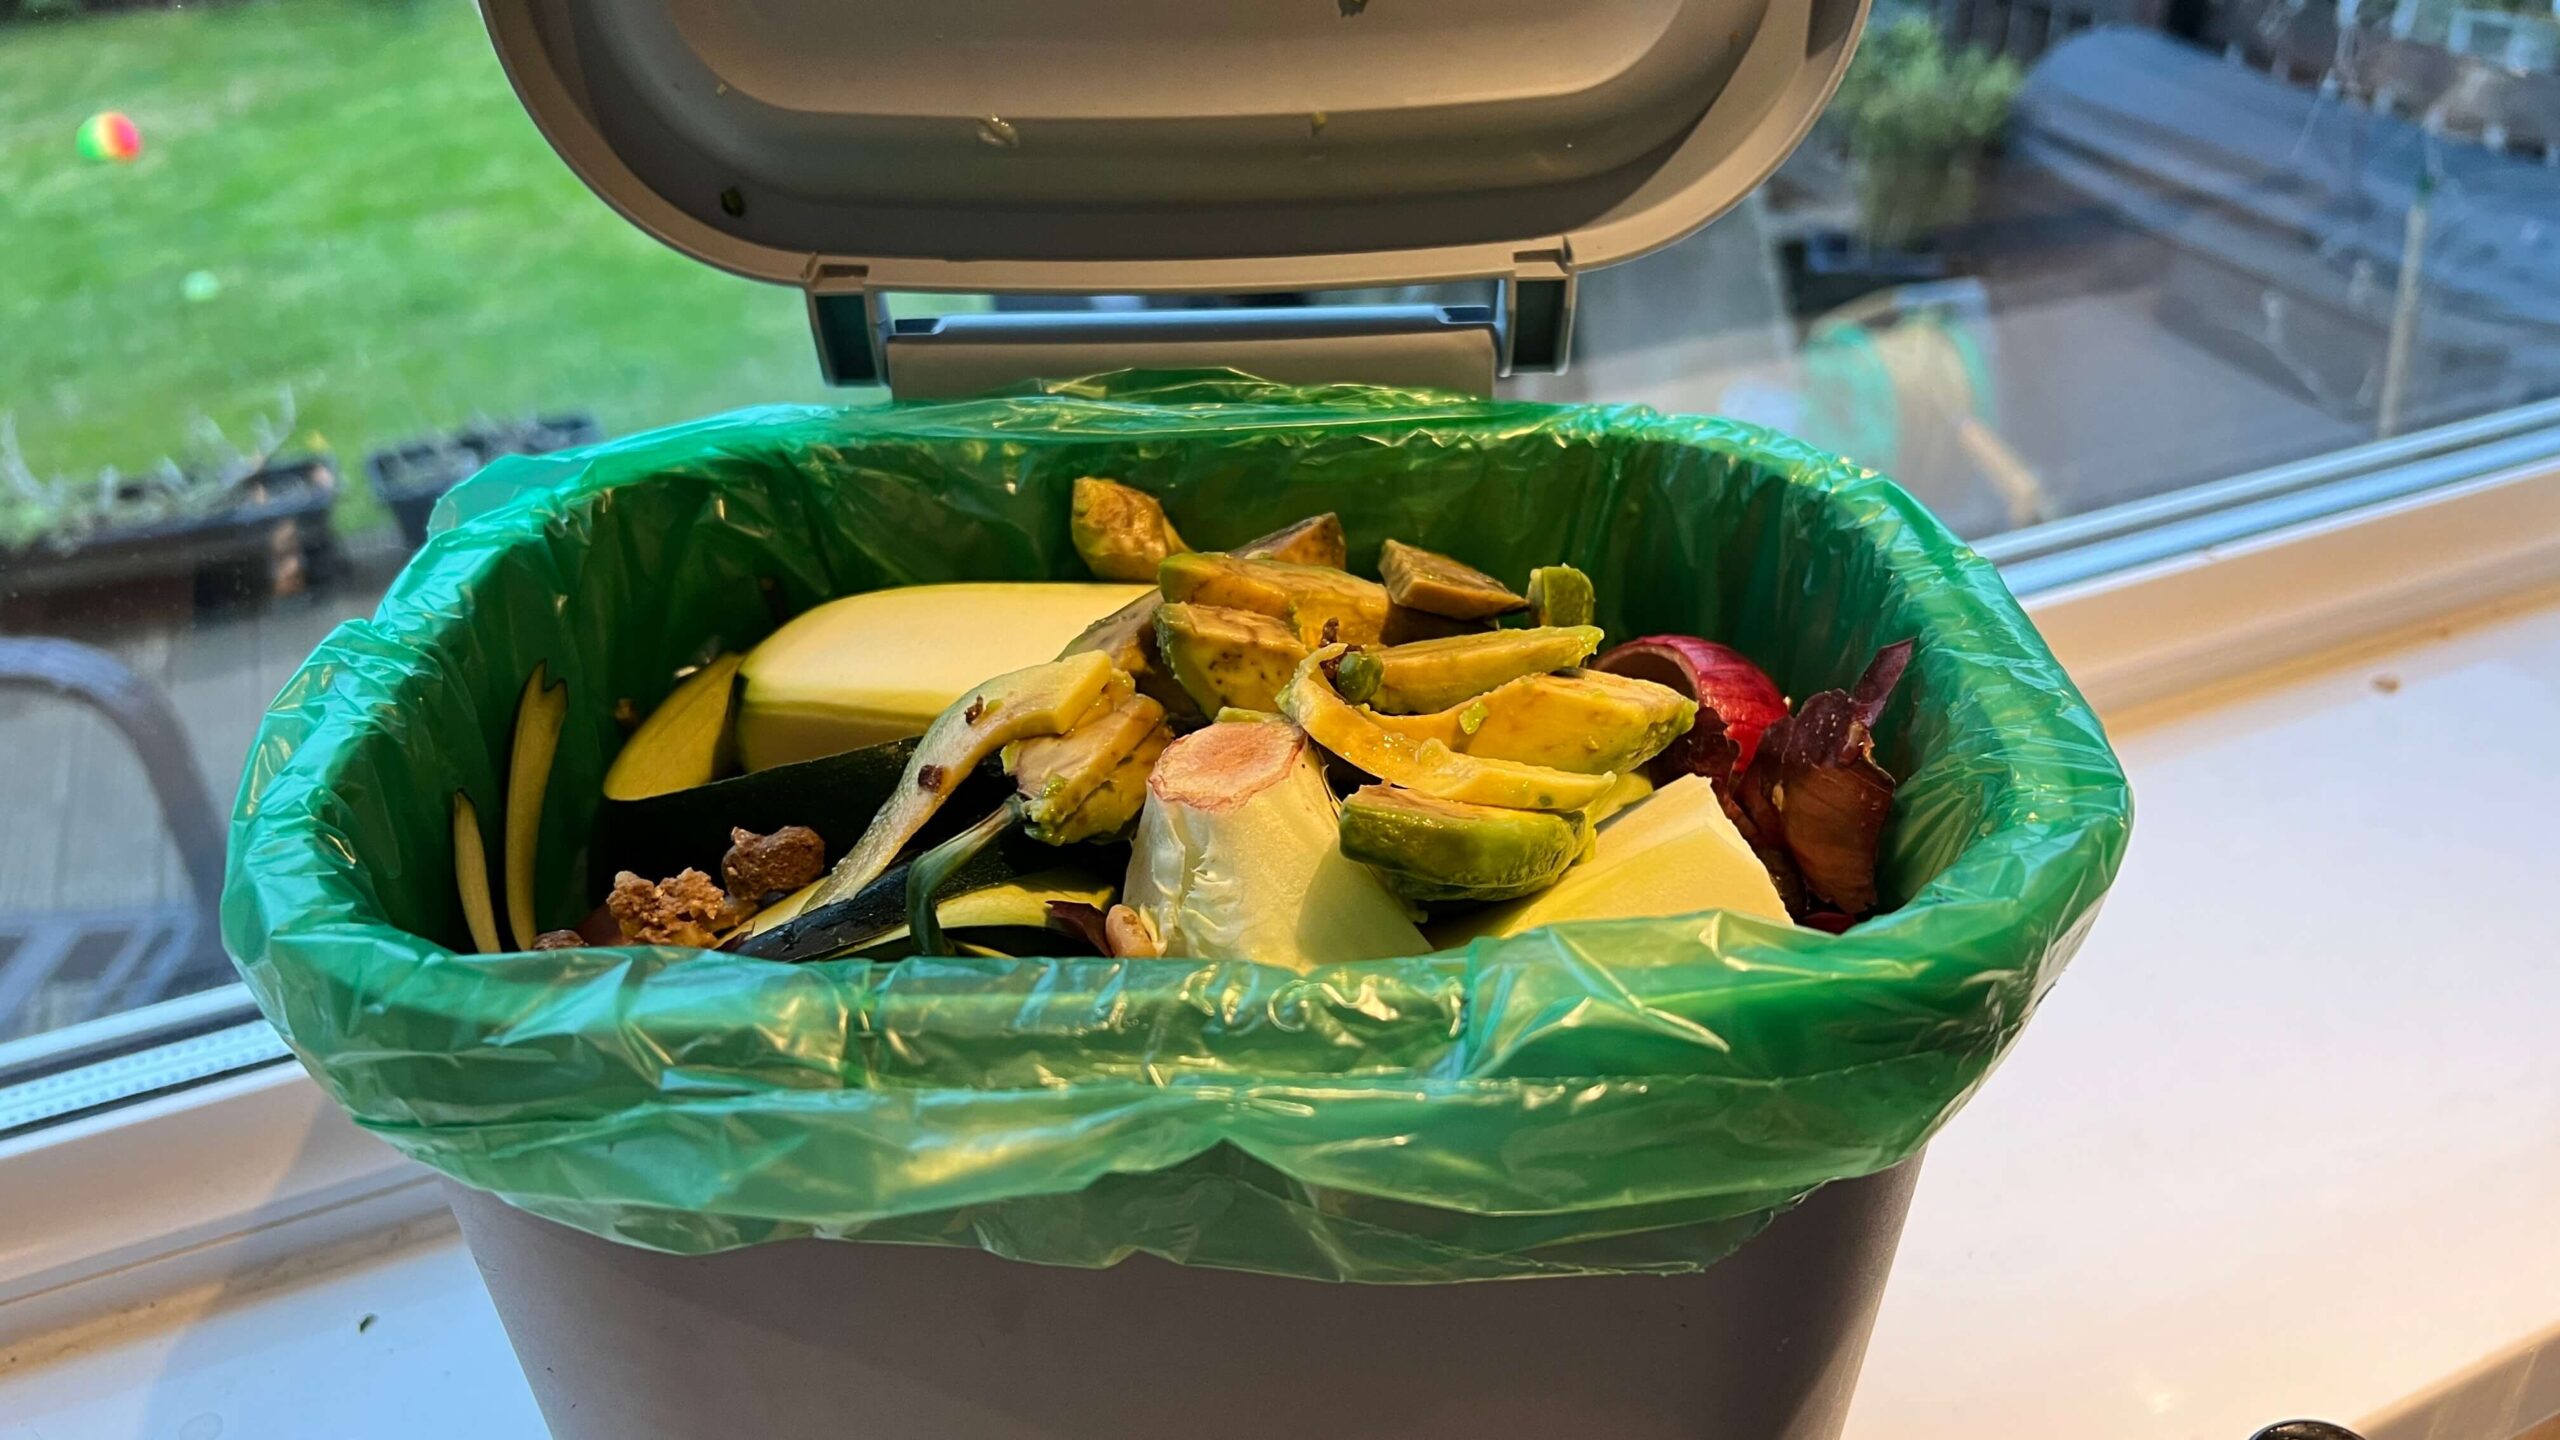 a food caddy bin with waste food